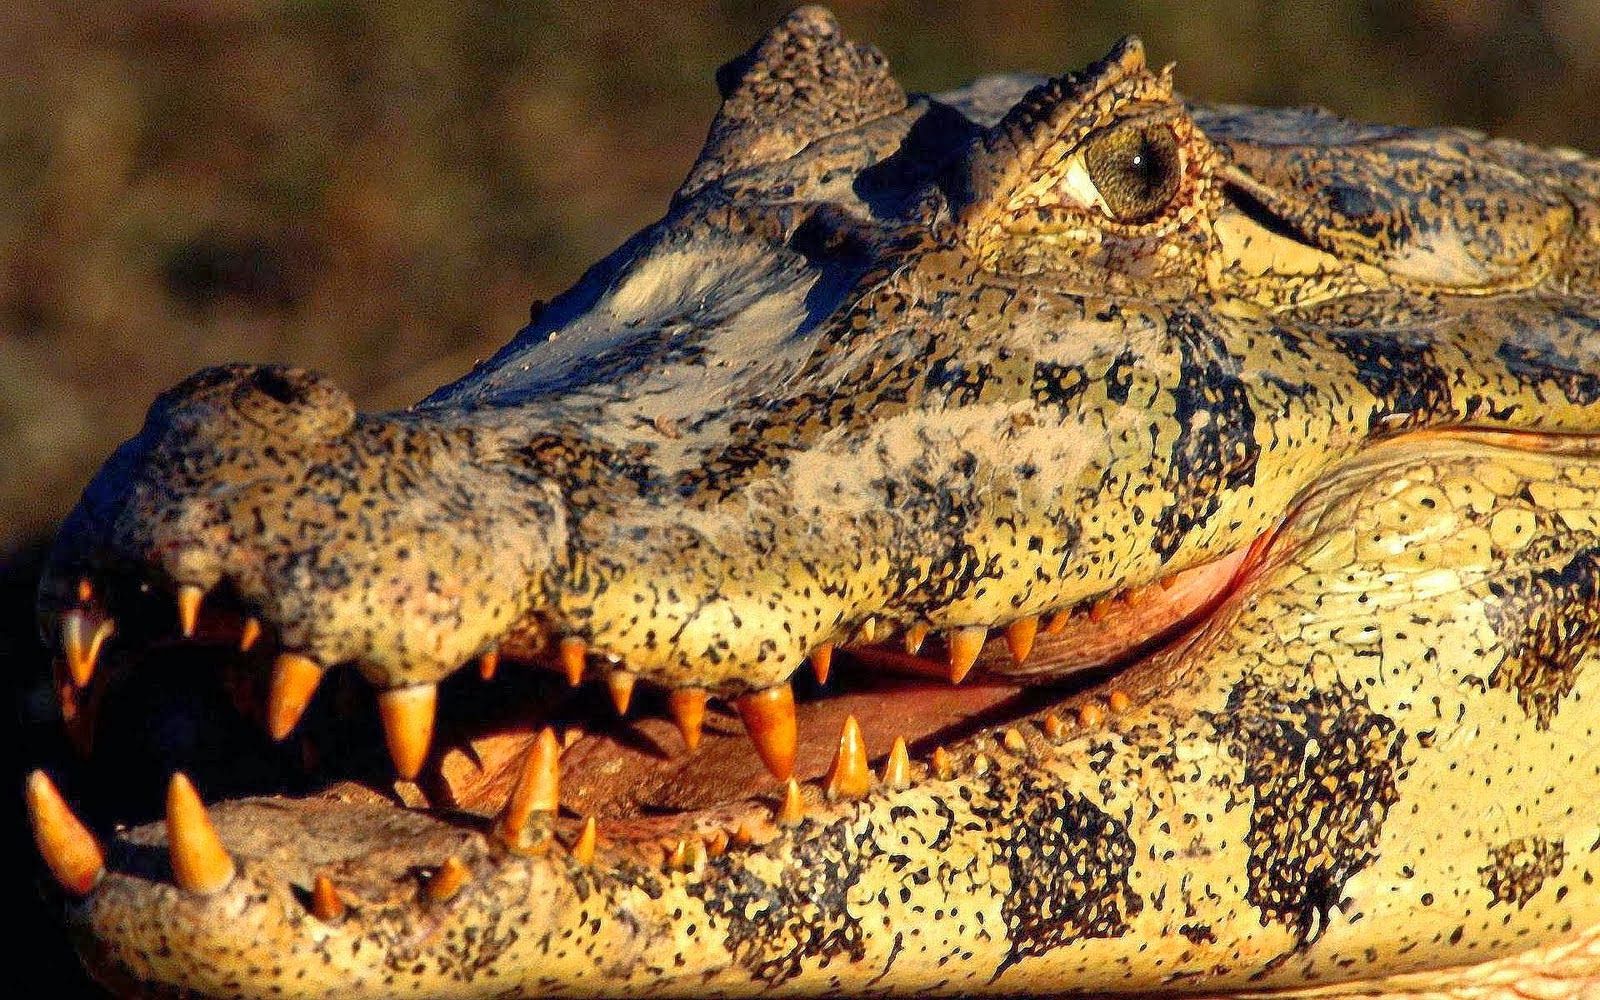 images of alligators and crocodiles